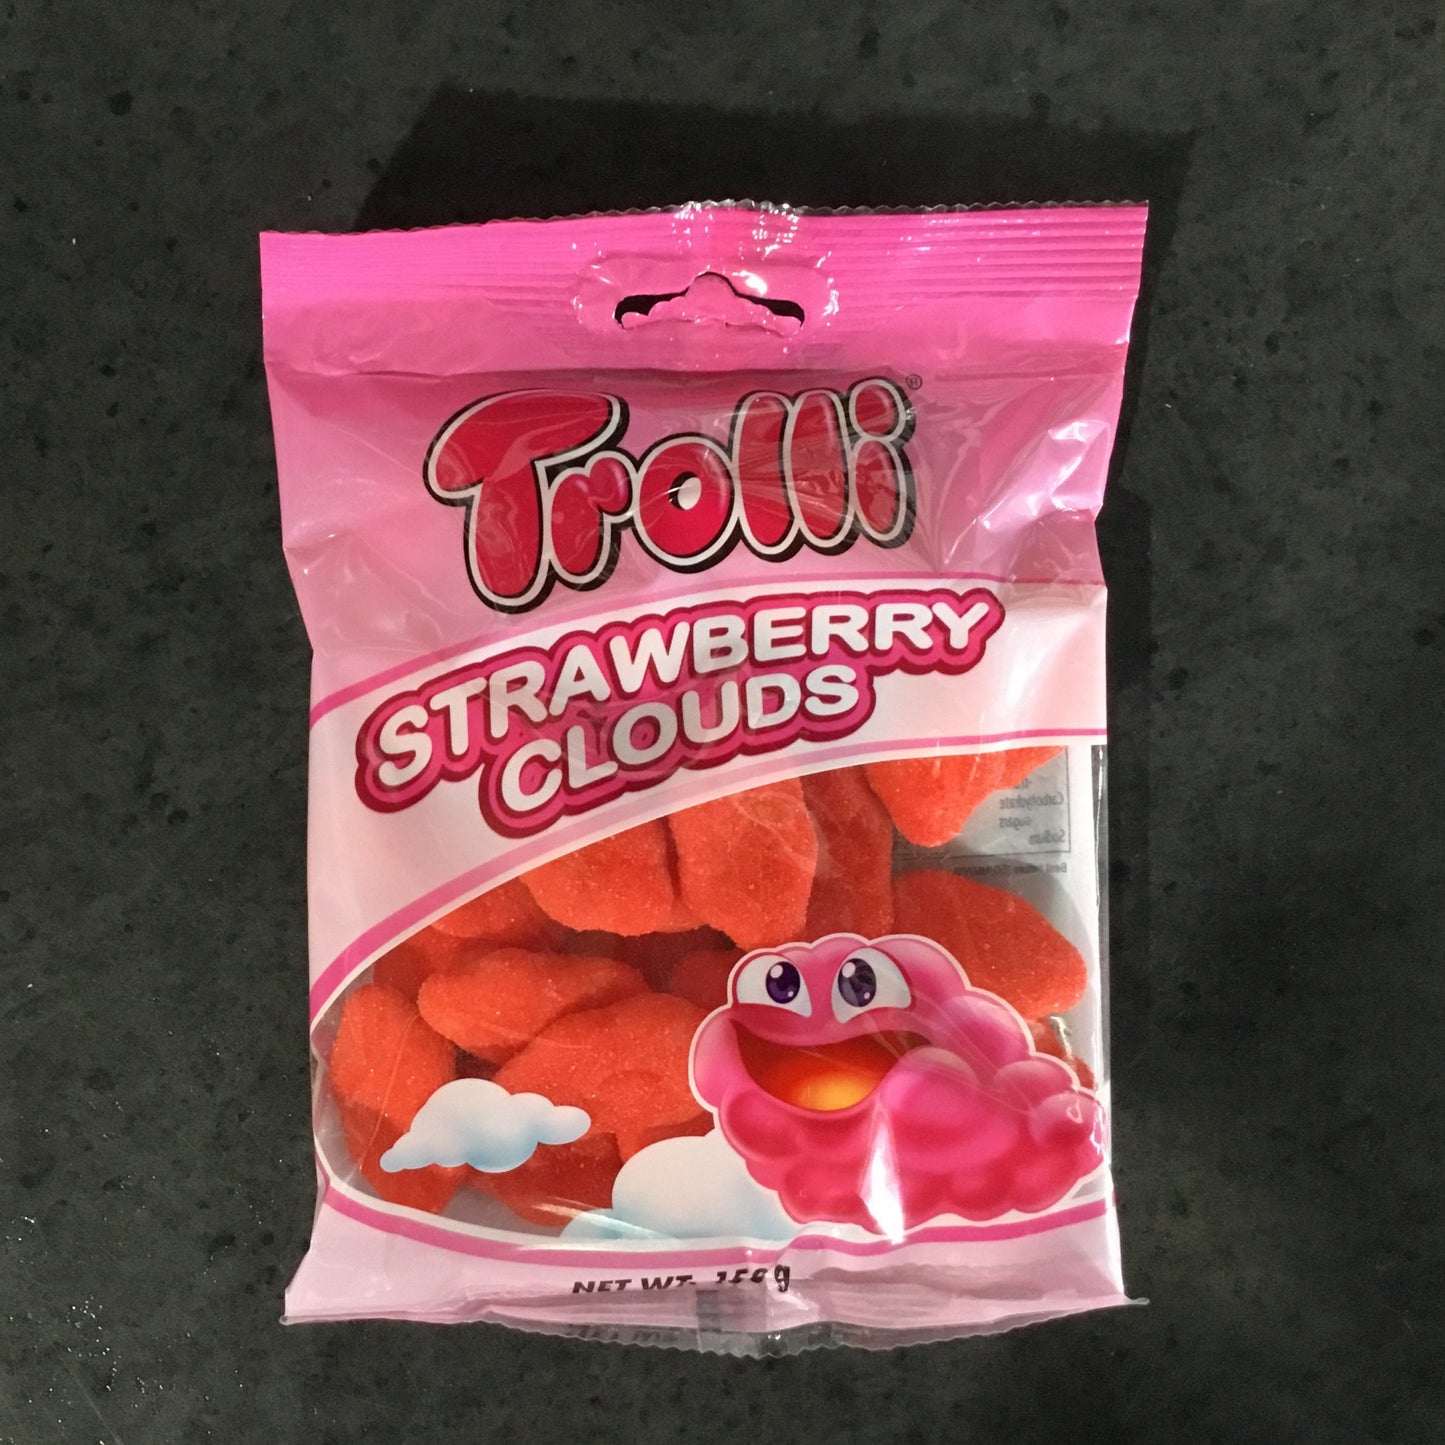 Trolli Strawberry Clouds 150g